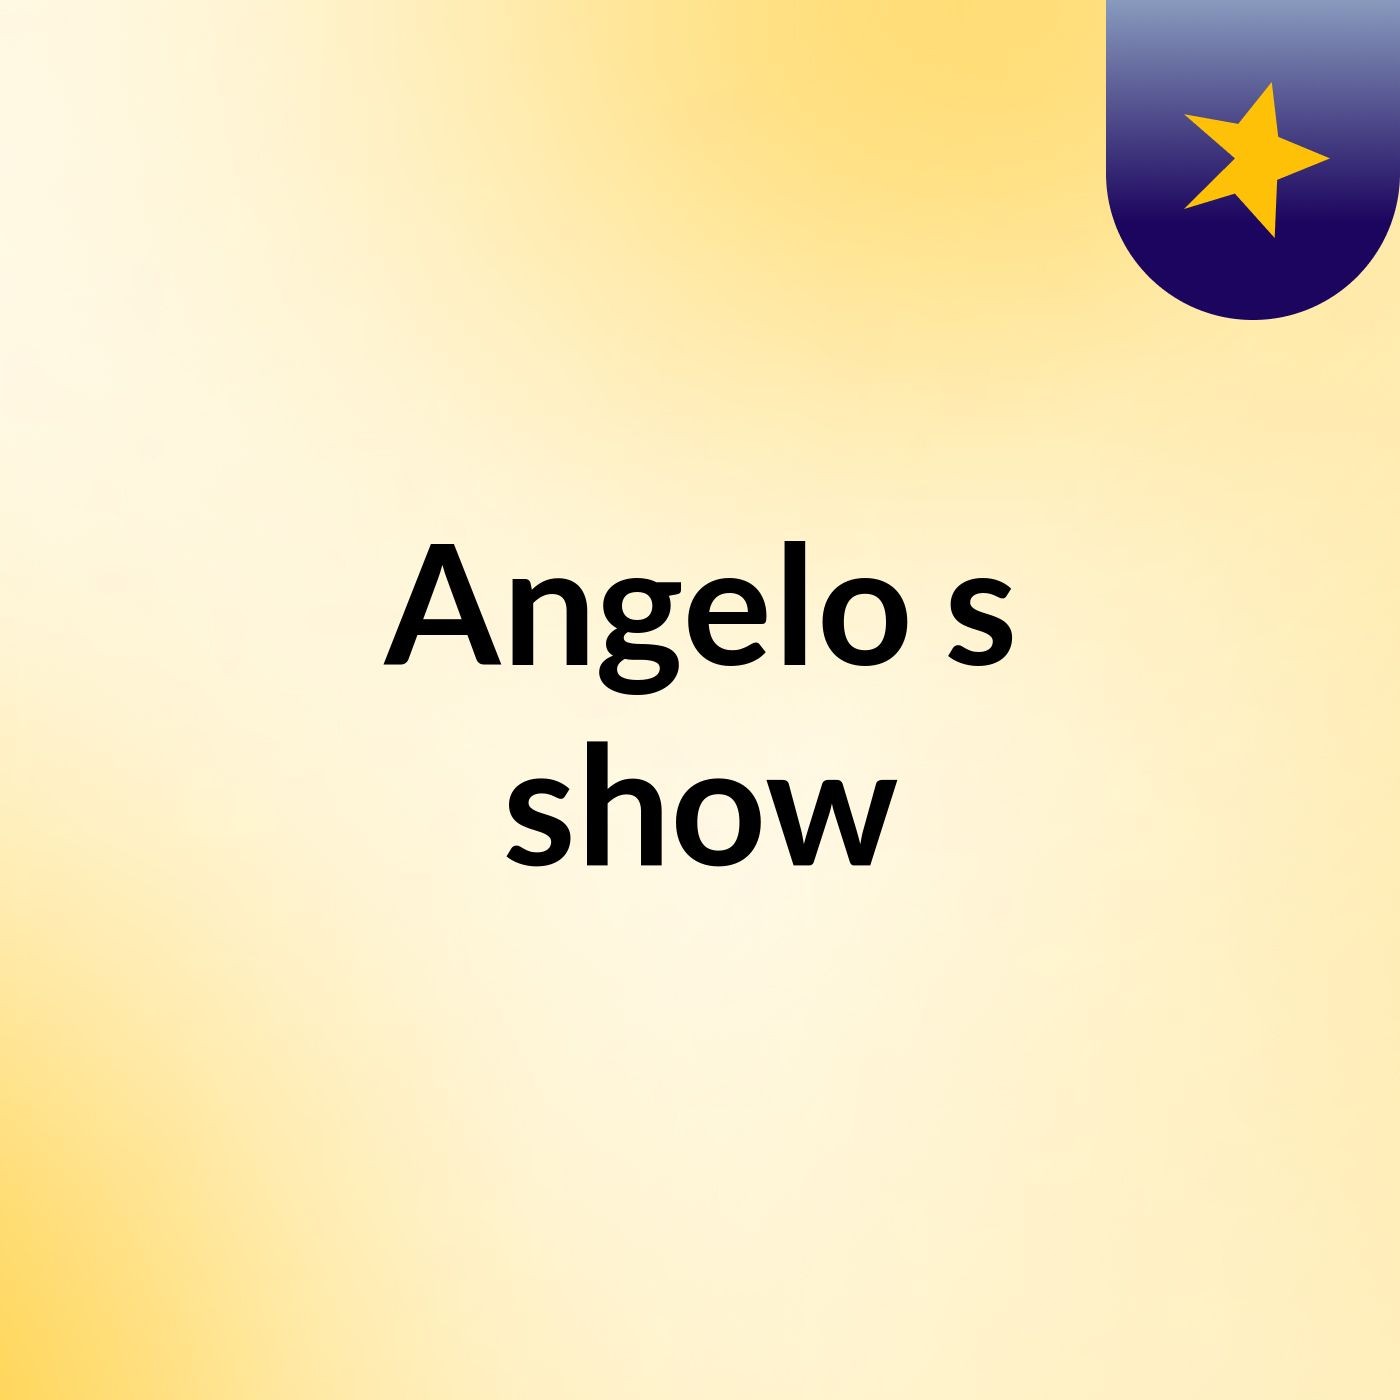 Angelo's show